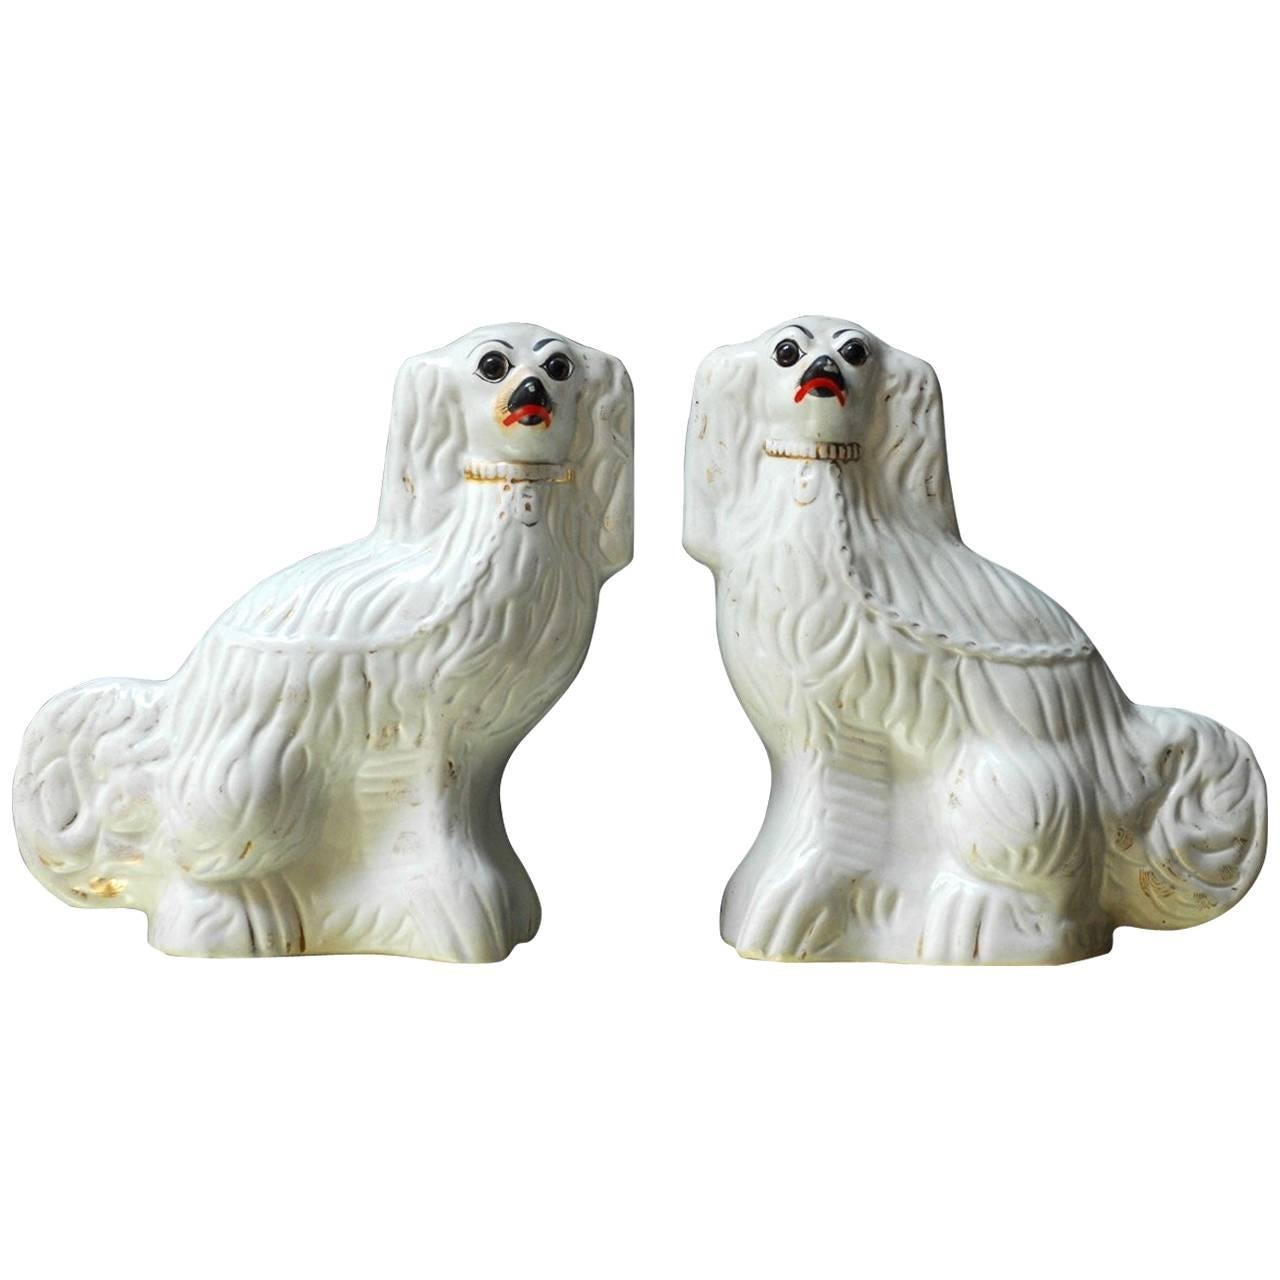 Pair of English Staffordshire Glazed Ceramic Dogs